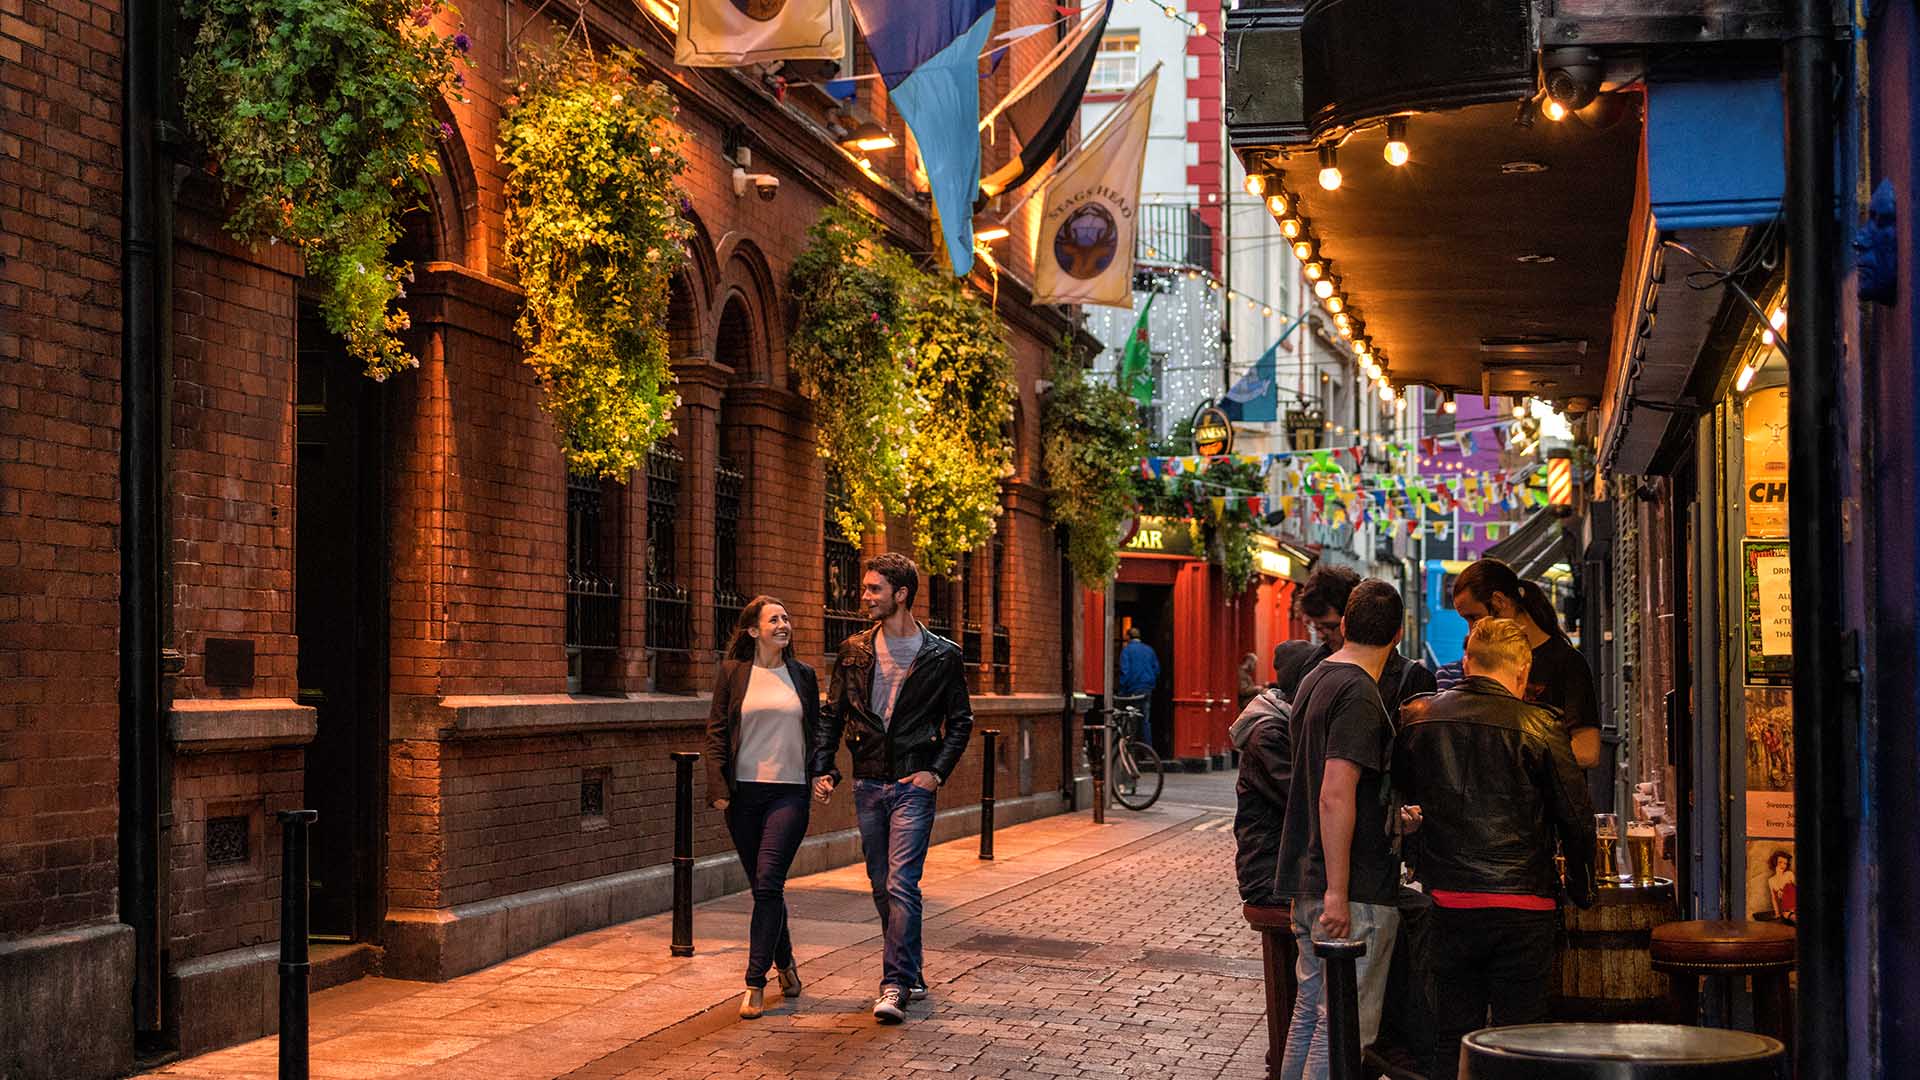 Streets of Dublin, Ireland